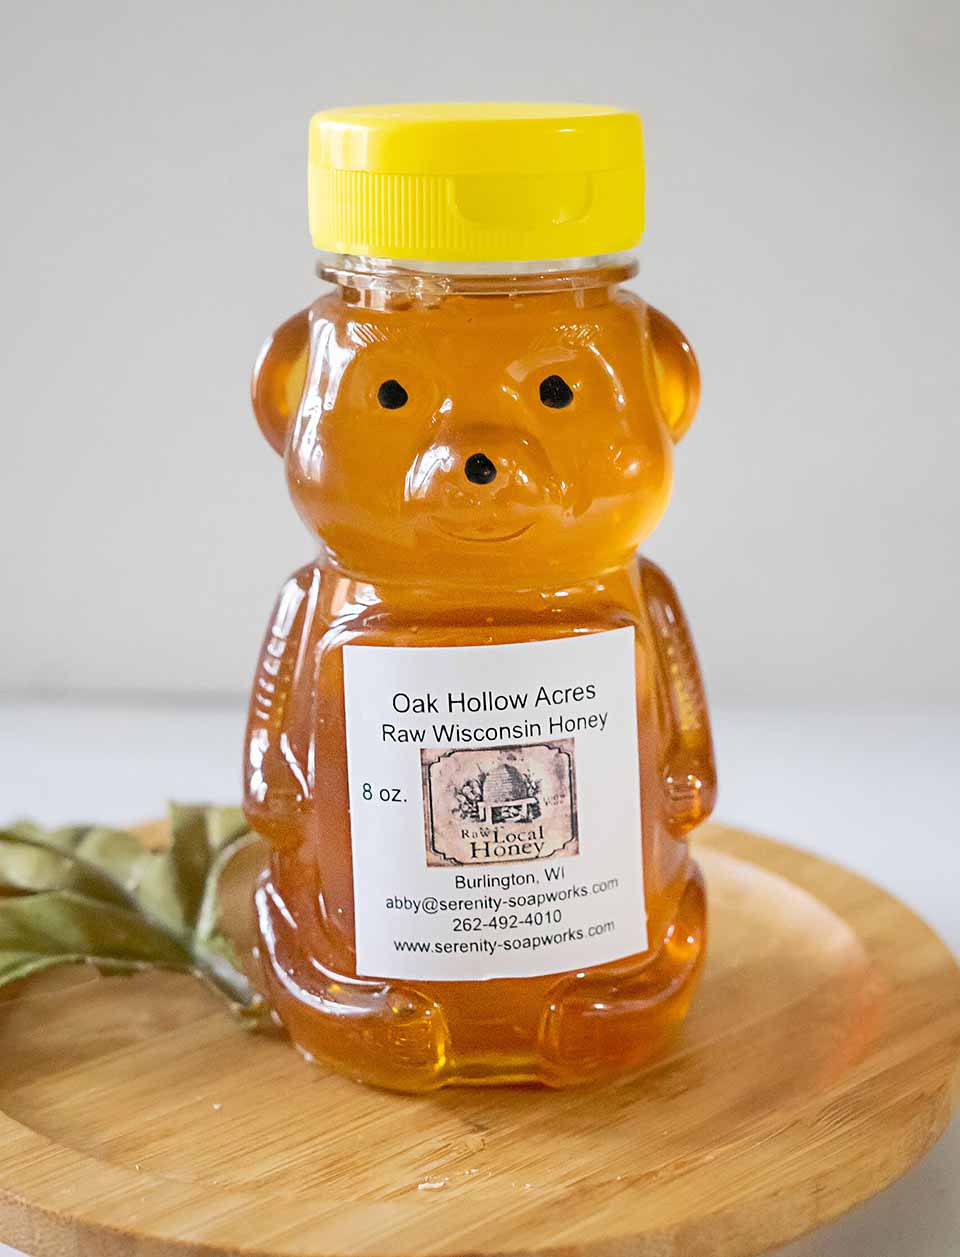 Oak Hollow Acres Honey